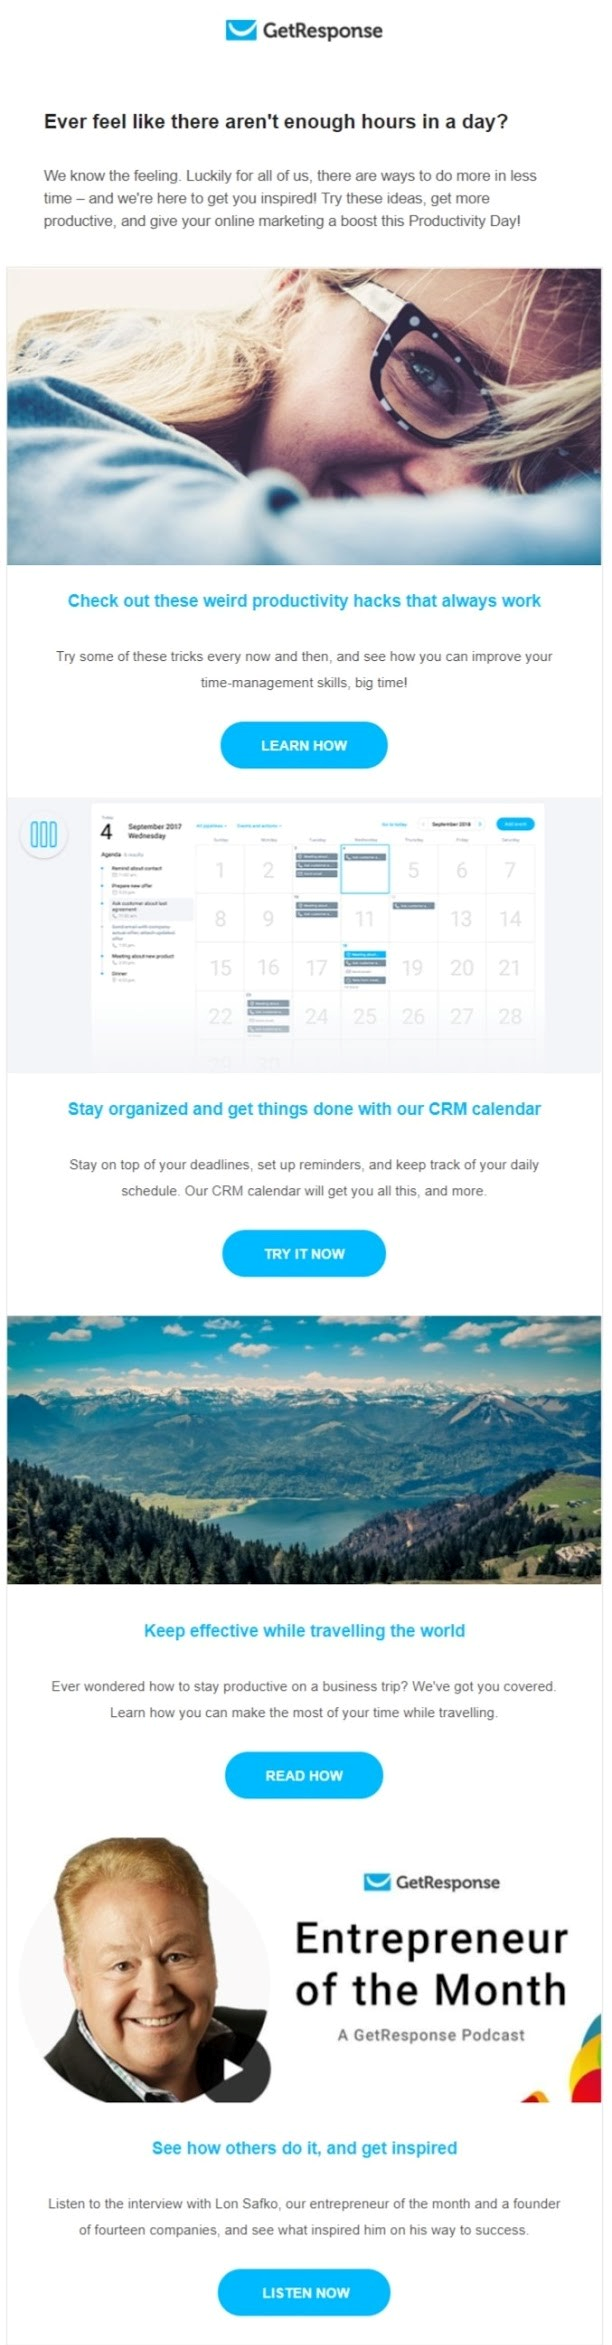 b2b email marketing example